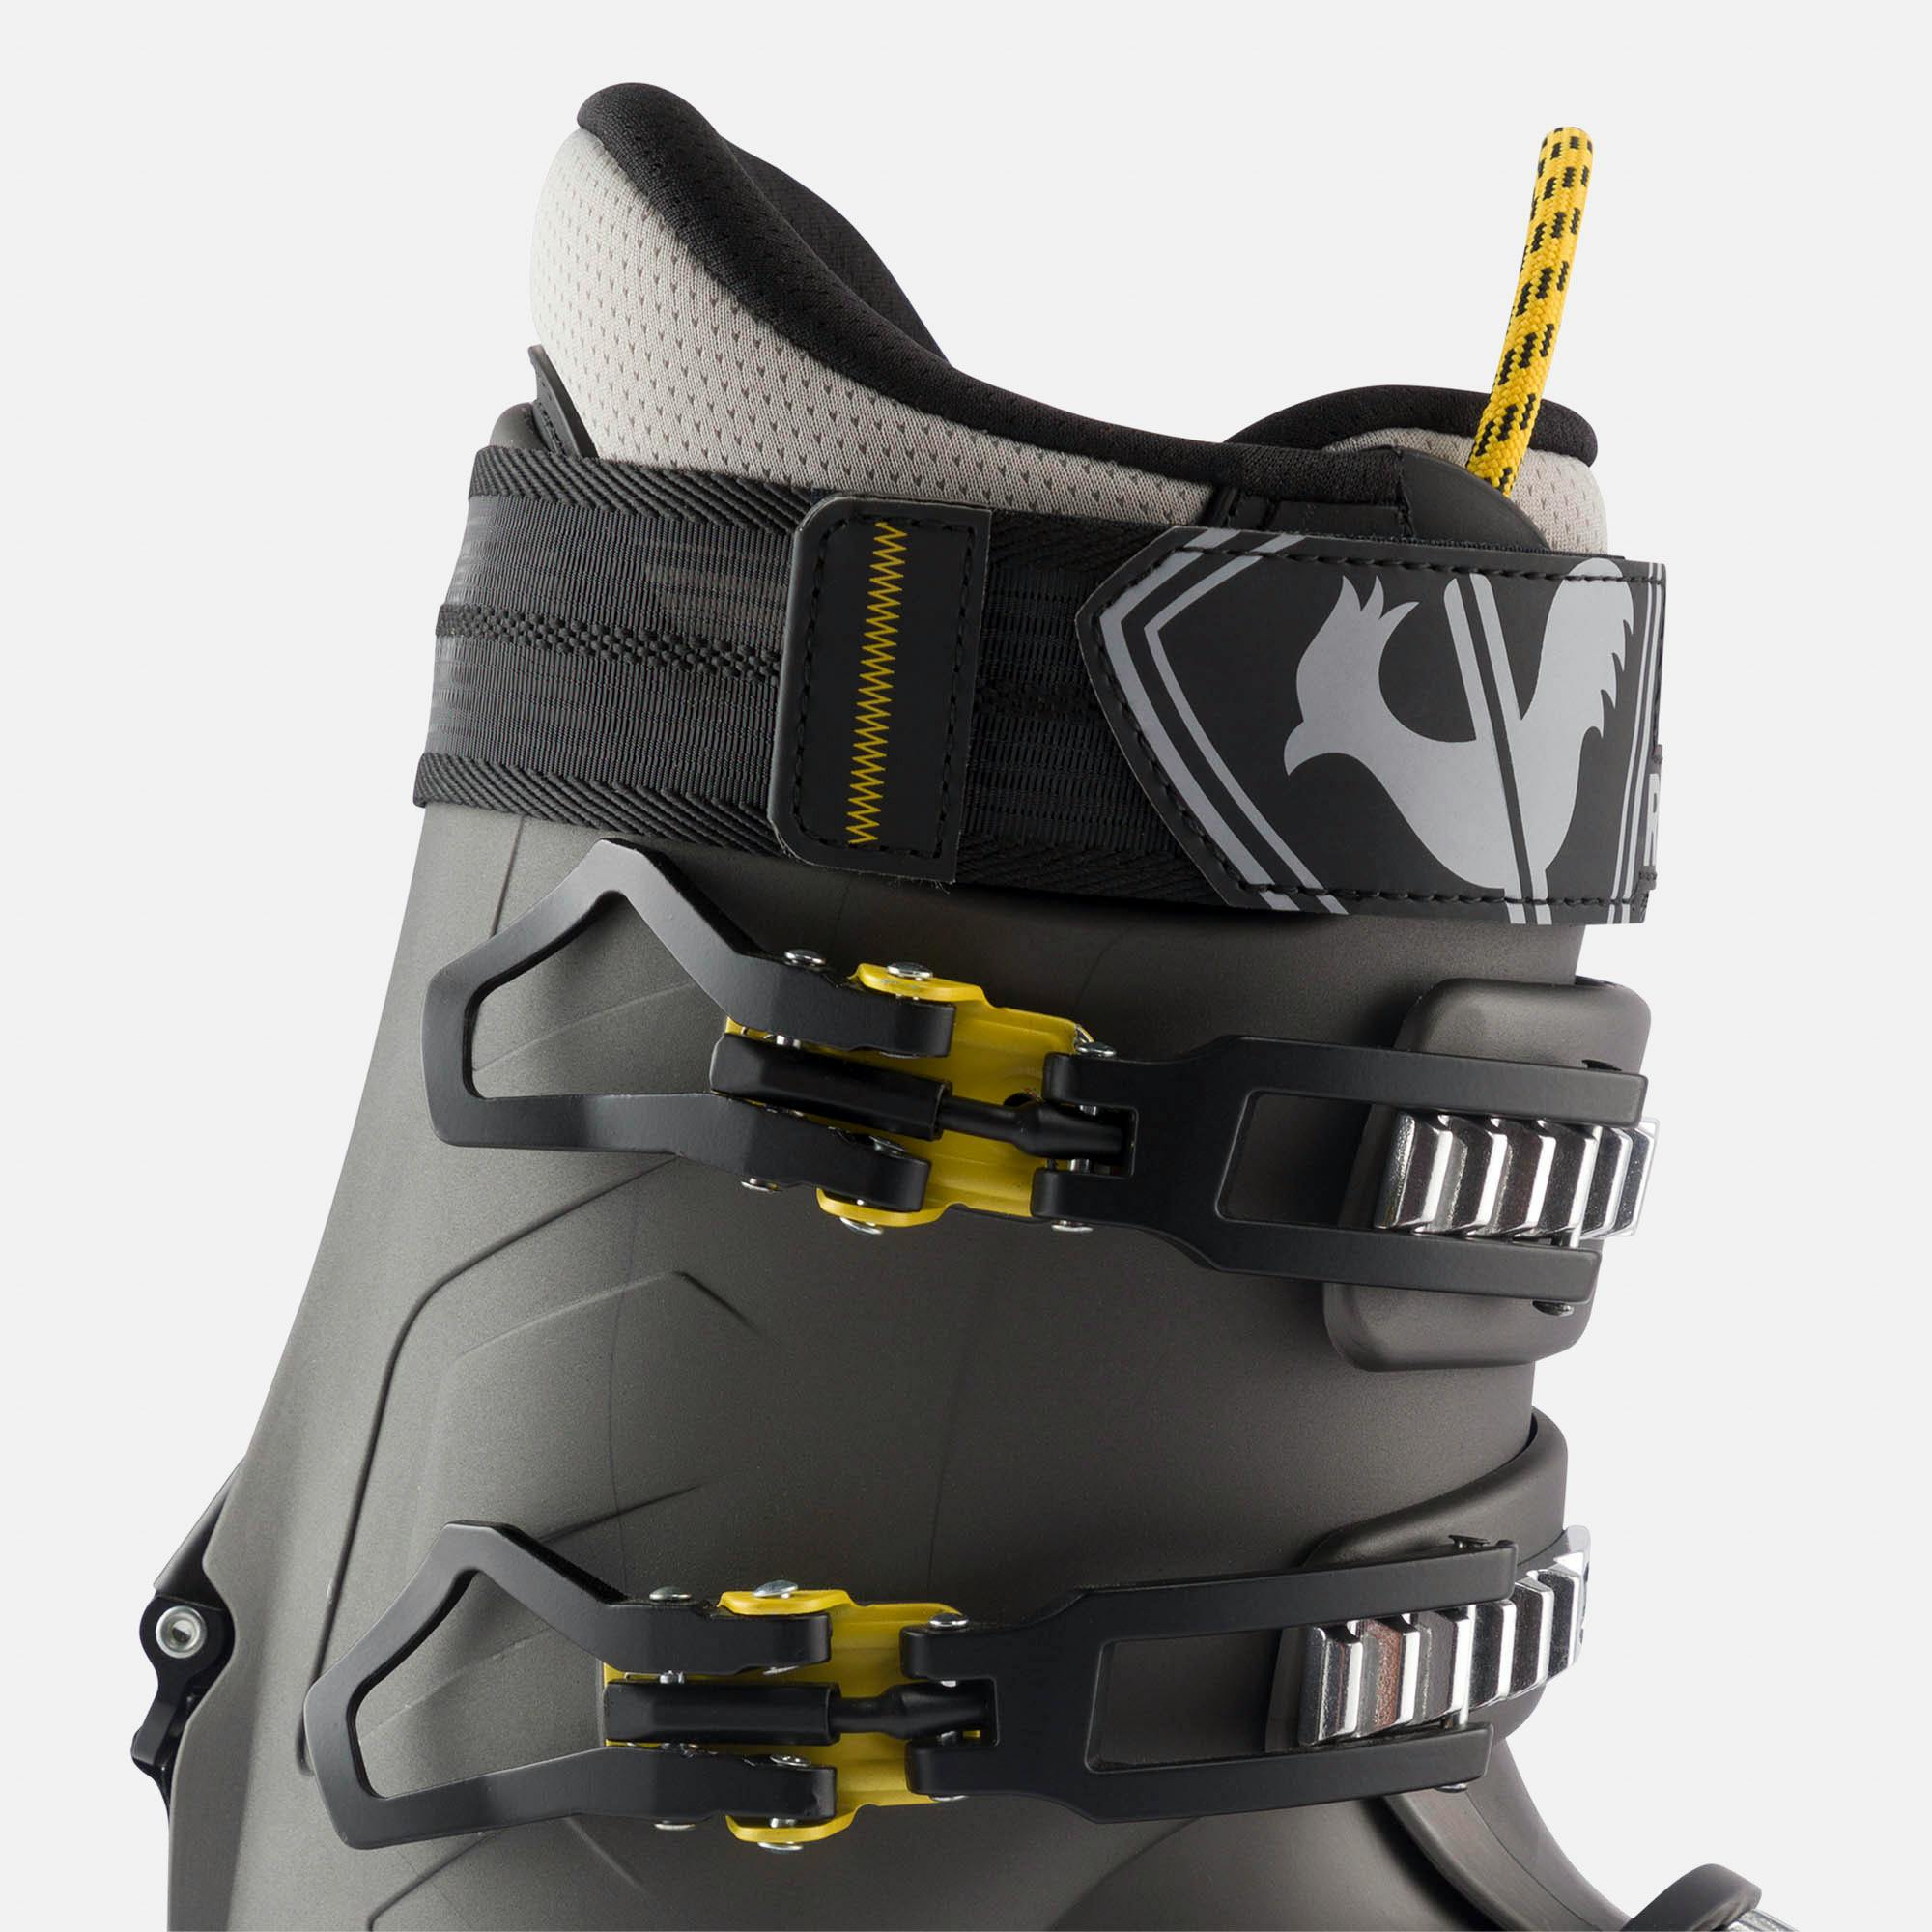 Rossignol Track 110 HV+ GW Ski Boots · 2024 · 28.5